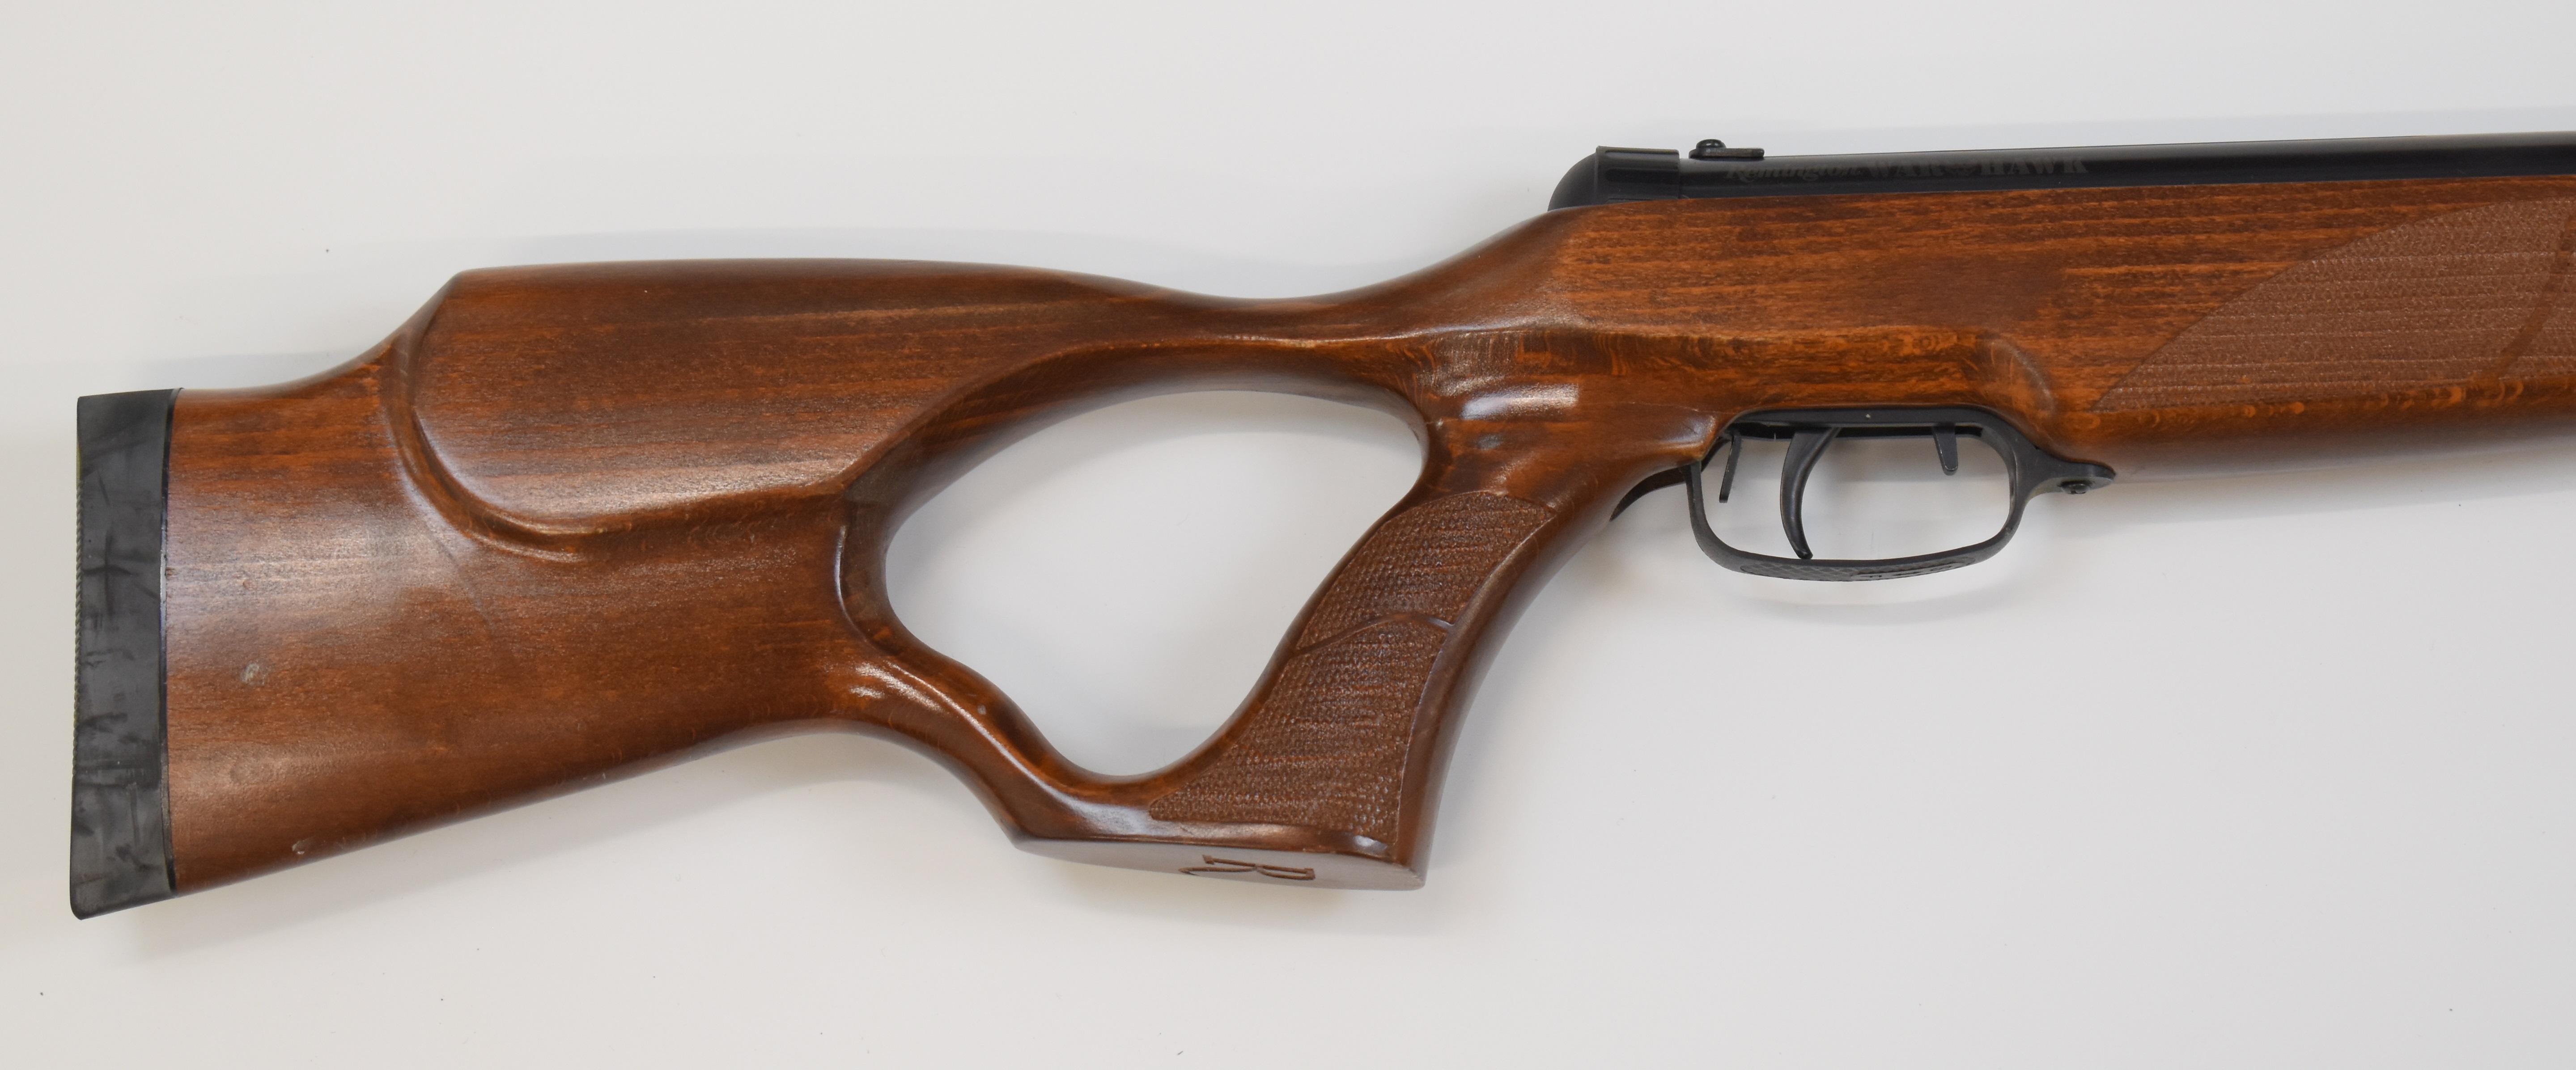 Remington Warhawk .177 under-lever air rifle with textured semi-pistol grip, raised cheek piece - Image 3 of 10